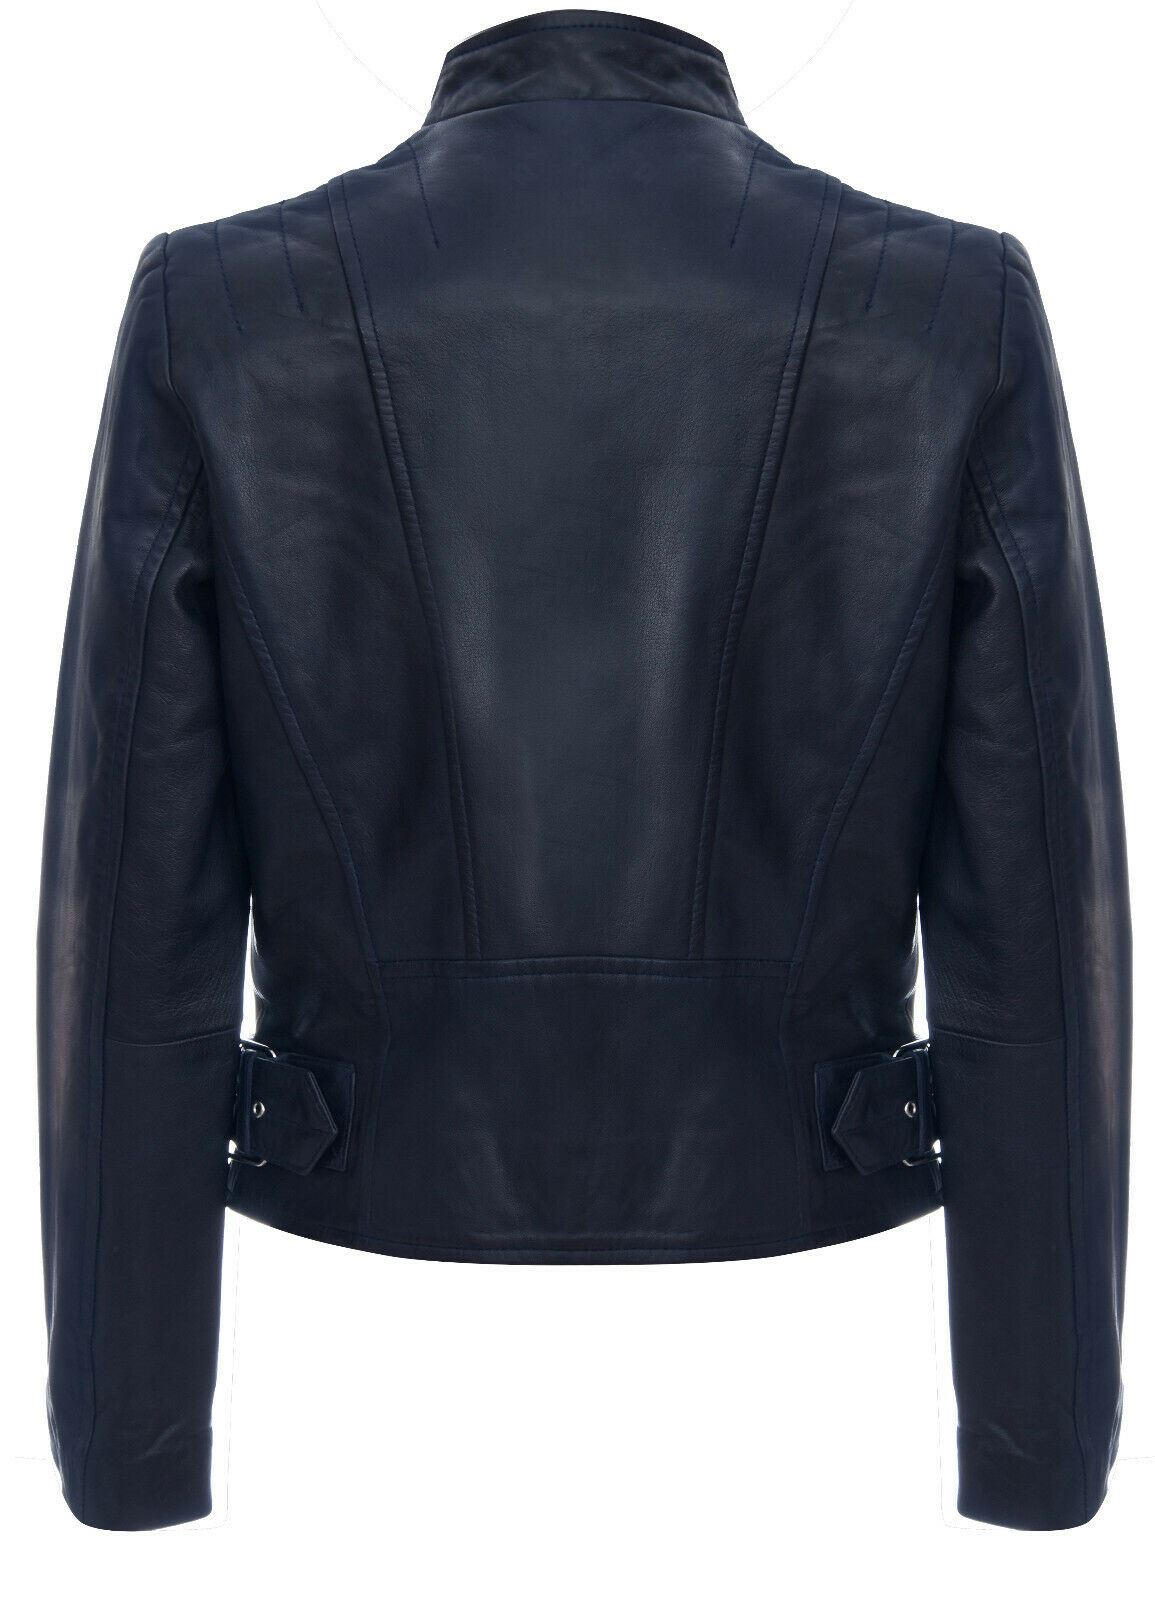 Womens Vintage Leather Biker Jacket-Marlow - Upperclass Fashions 